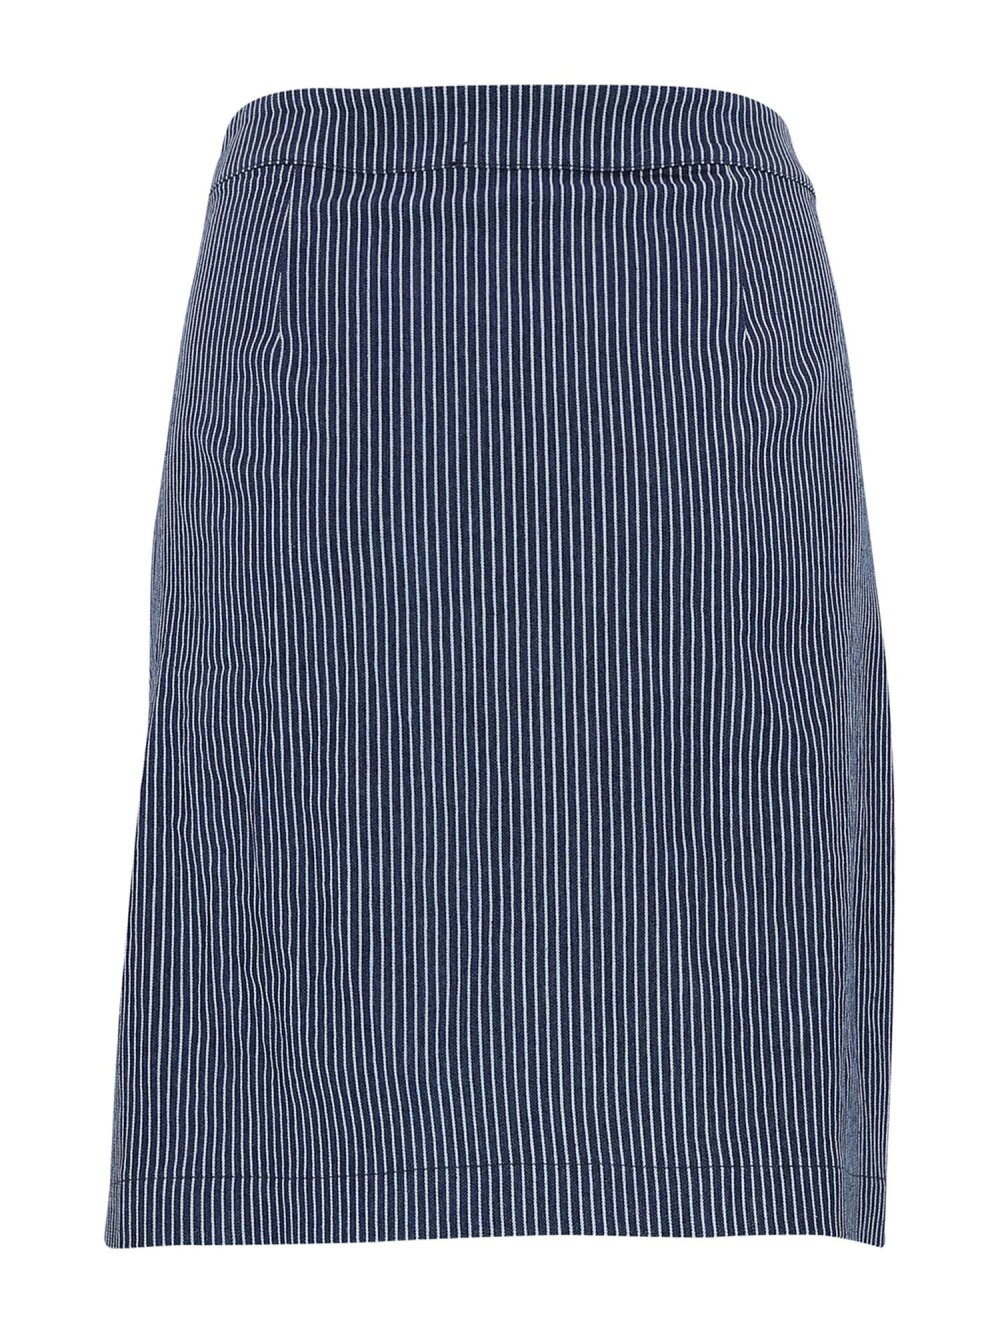 Continue - Gabby skirt stripe